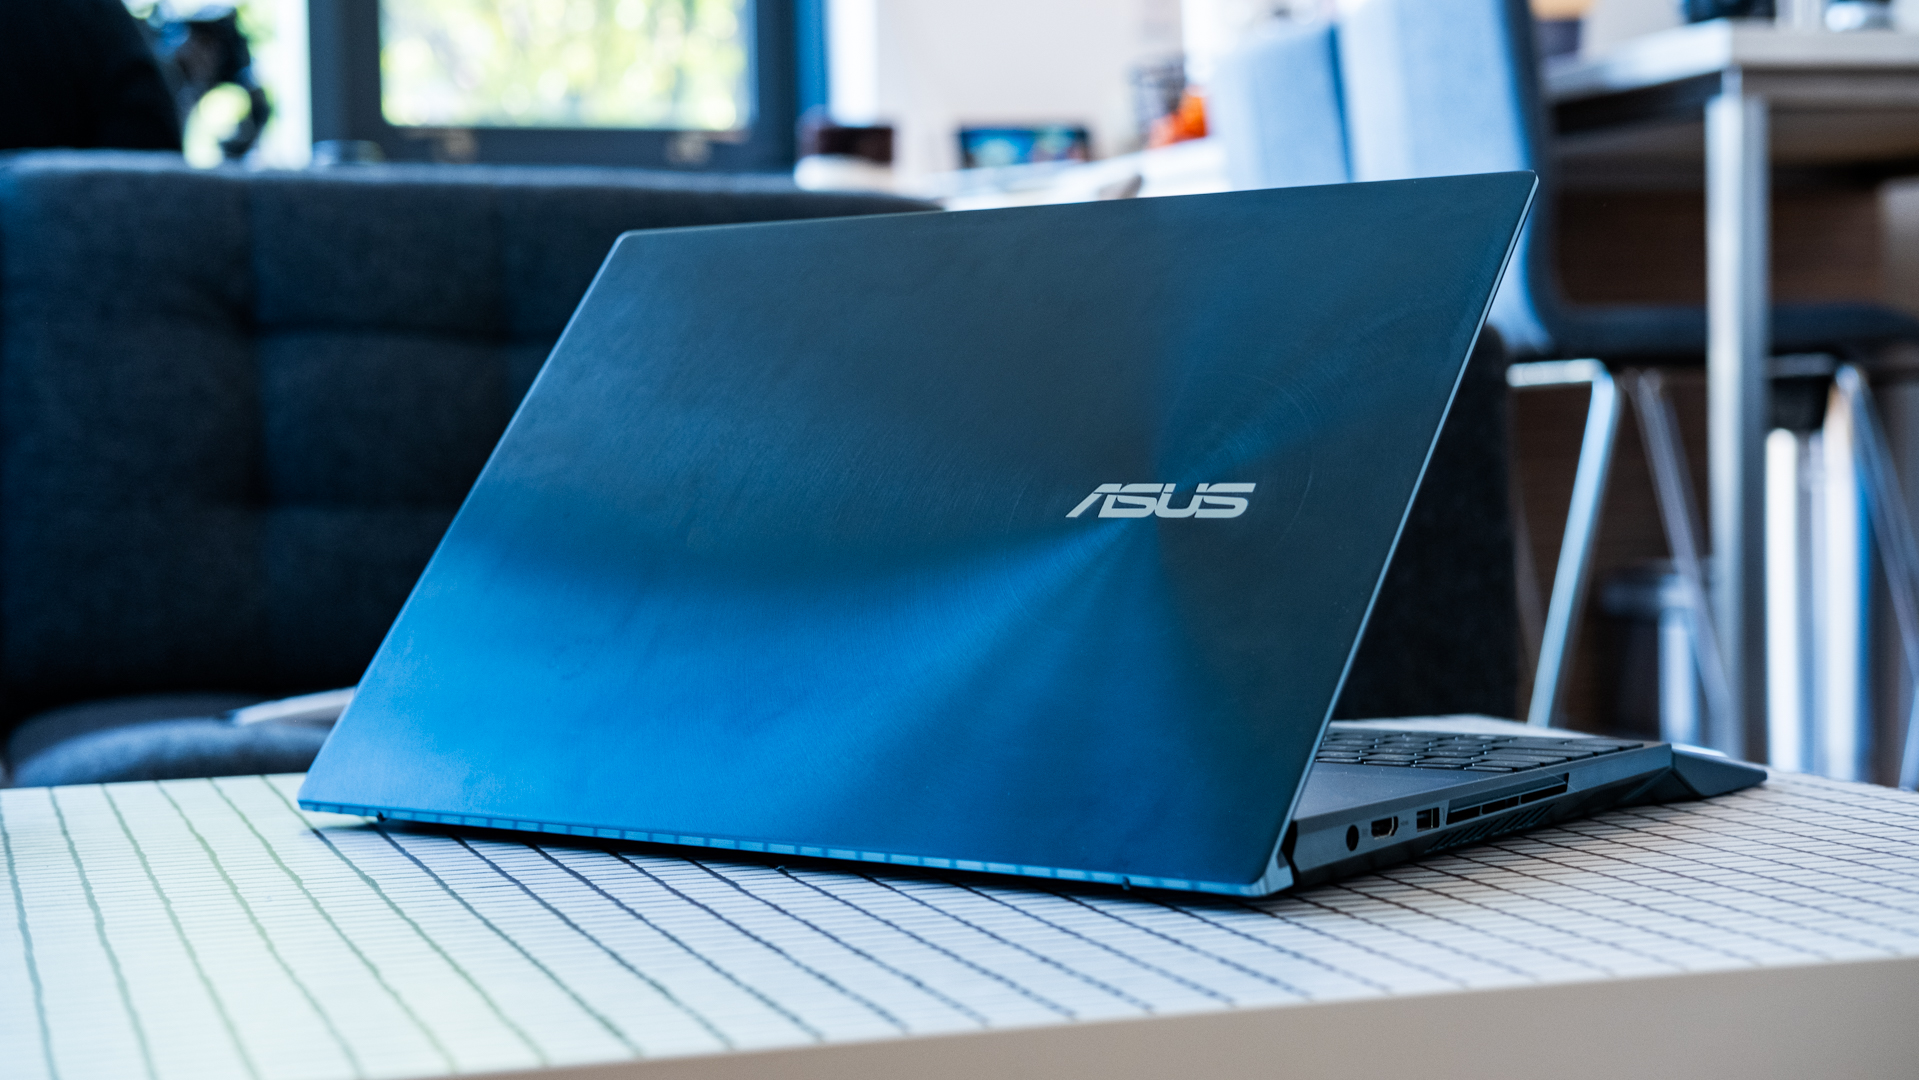 Asus Laptop Argos Discount Price, Save 48% | jlcatj.gob.mx